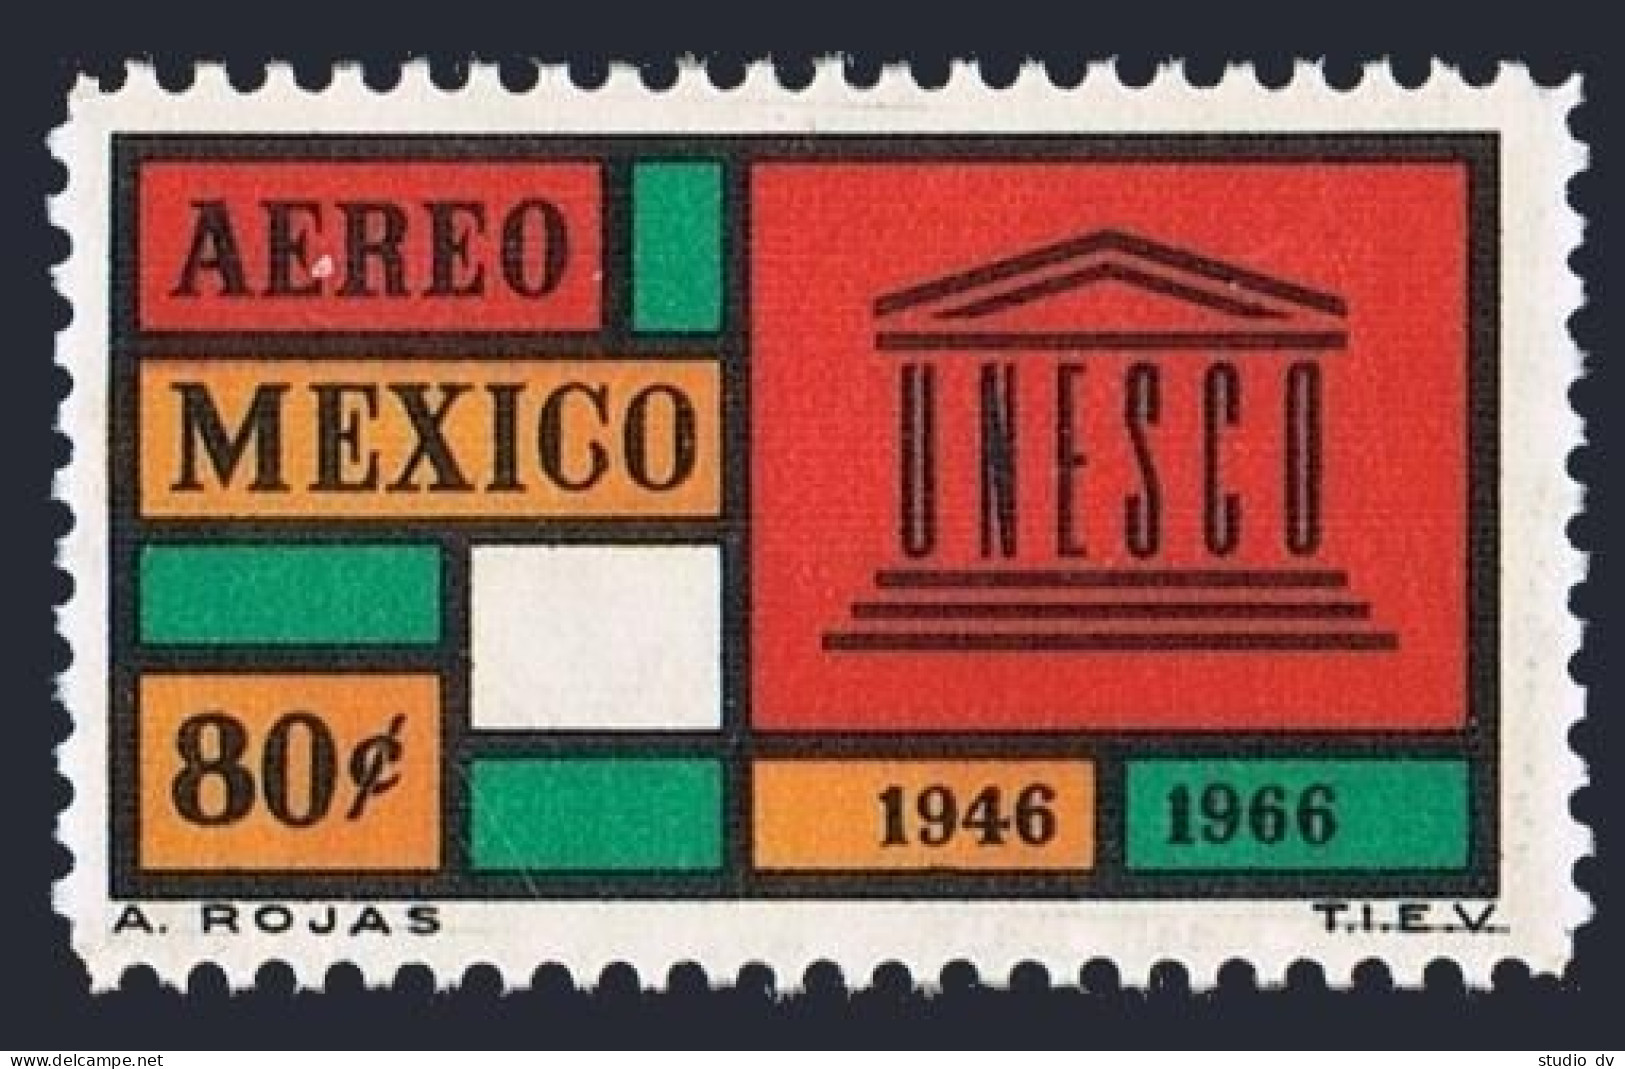 Mexico C321 Perf 11 Block/4,MNH.Michel 1224A. UNESCO,20th Ann.1966. - Mexique